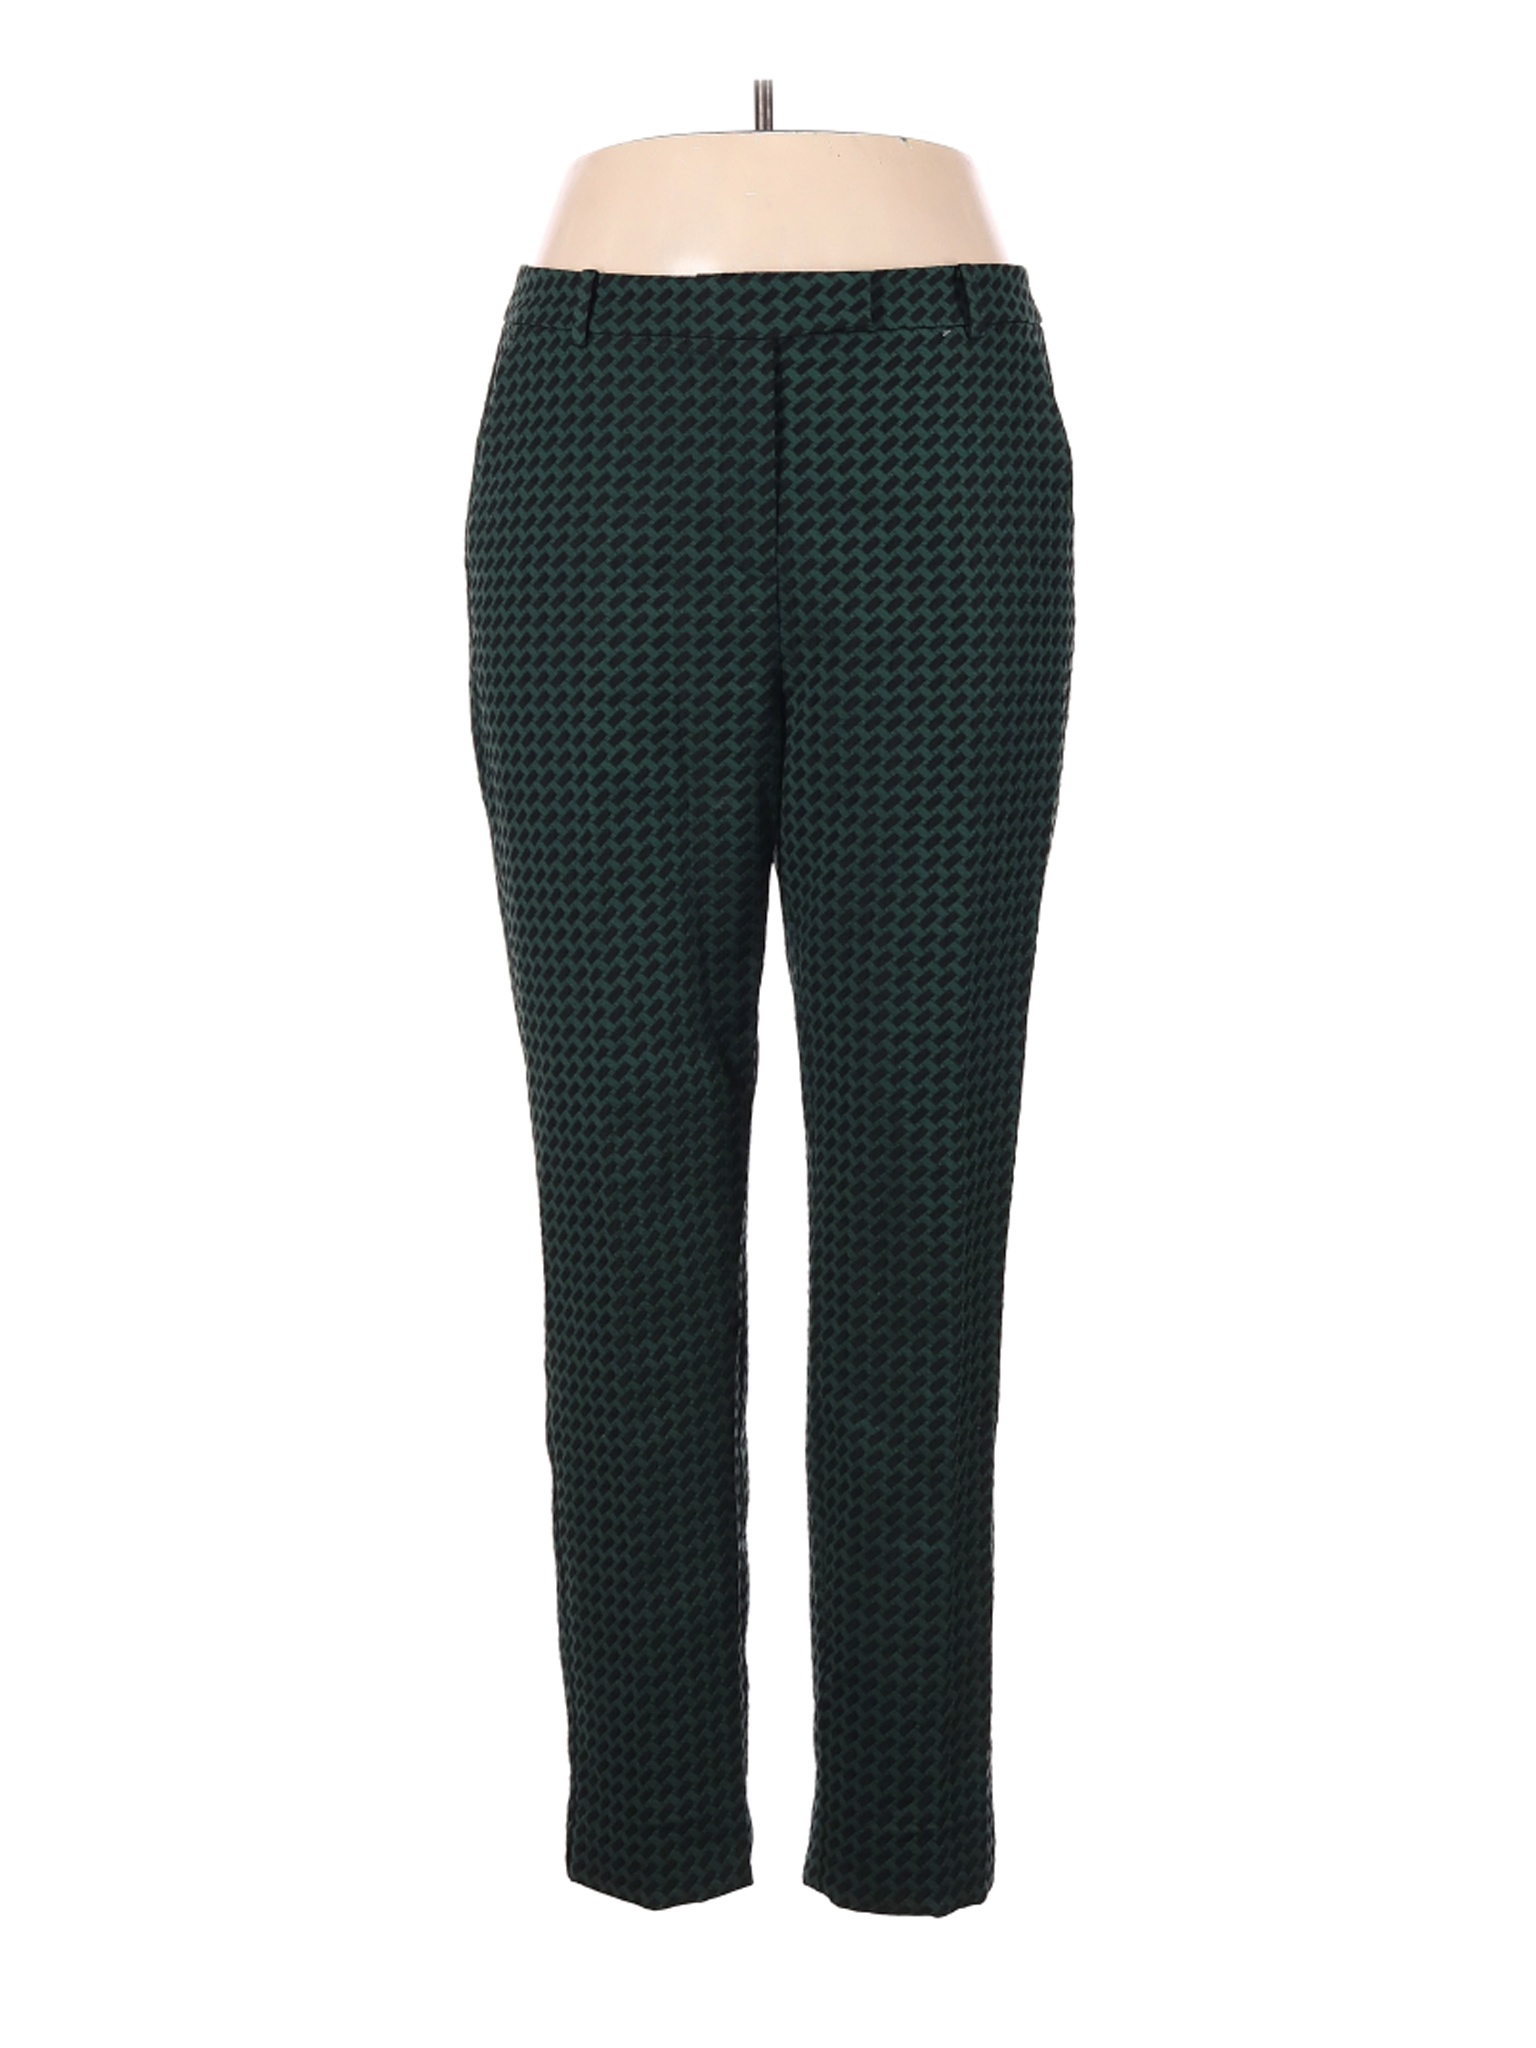 M&S Collection Women Green Dress Pants 16 uk | eBay